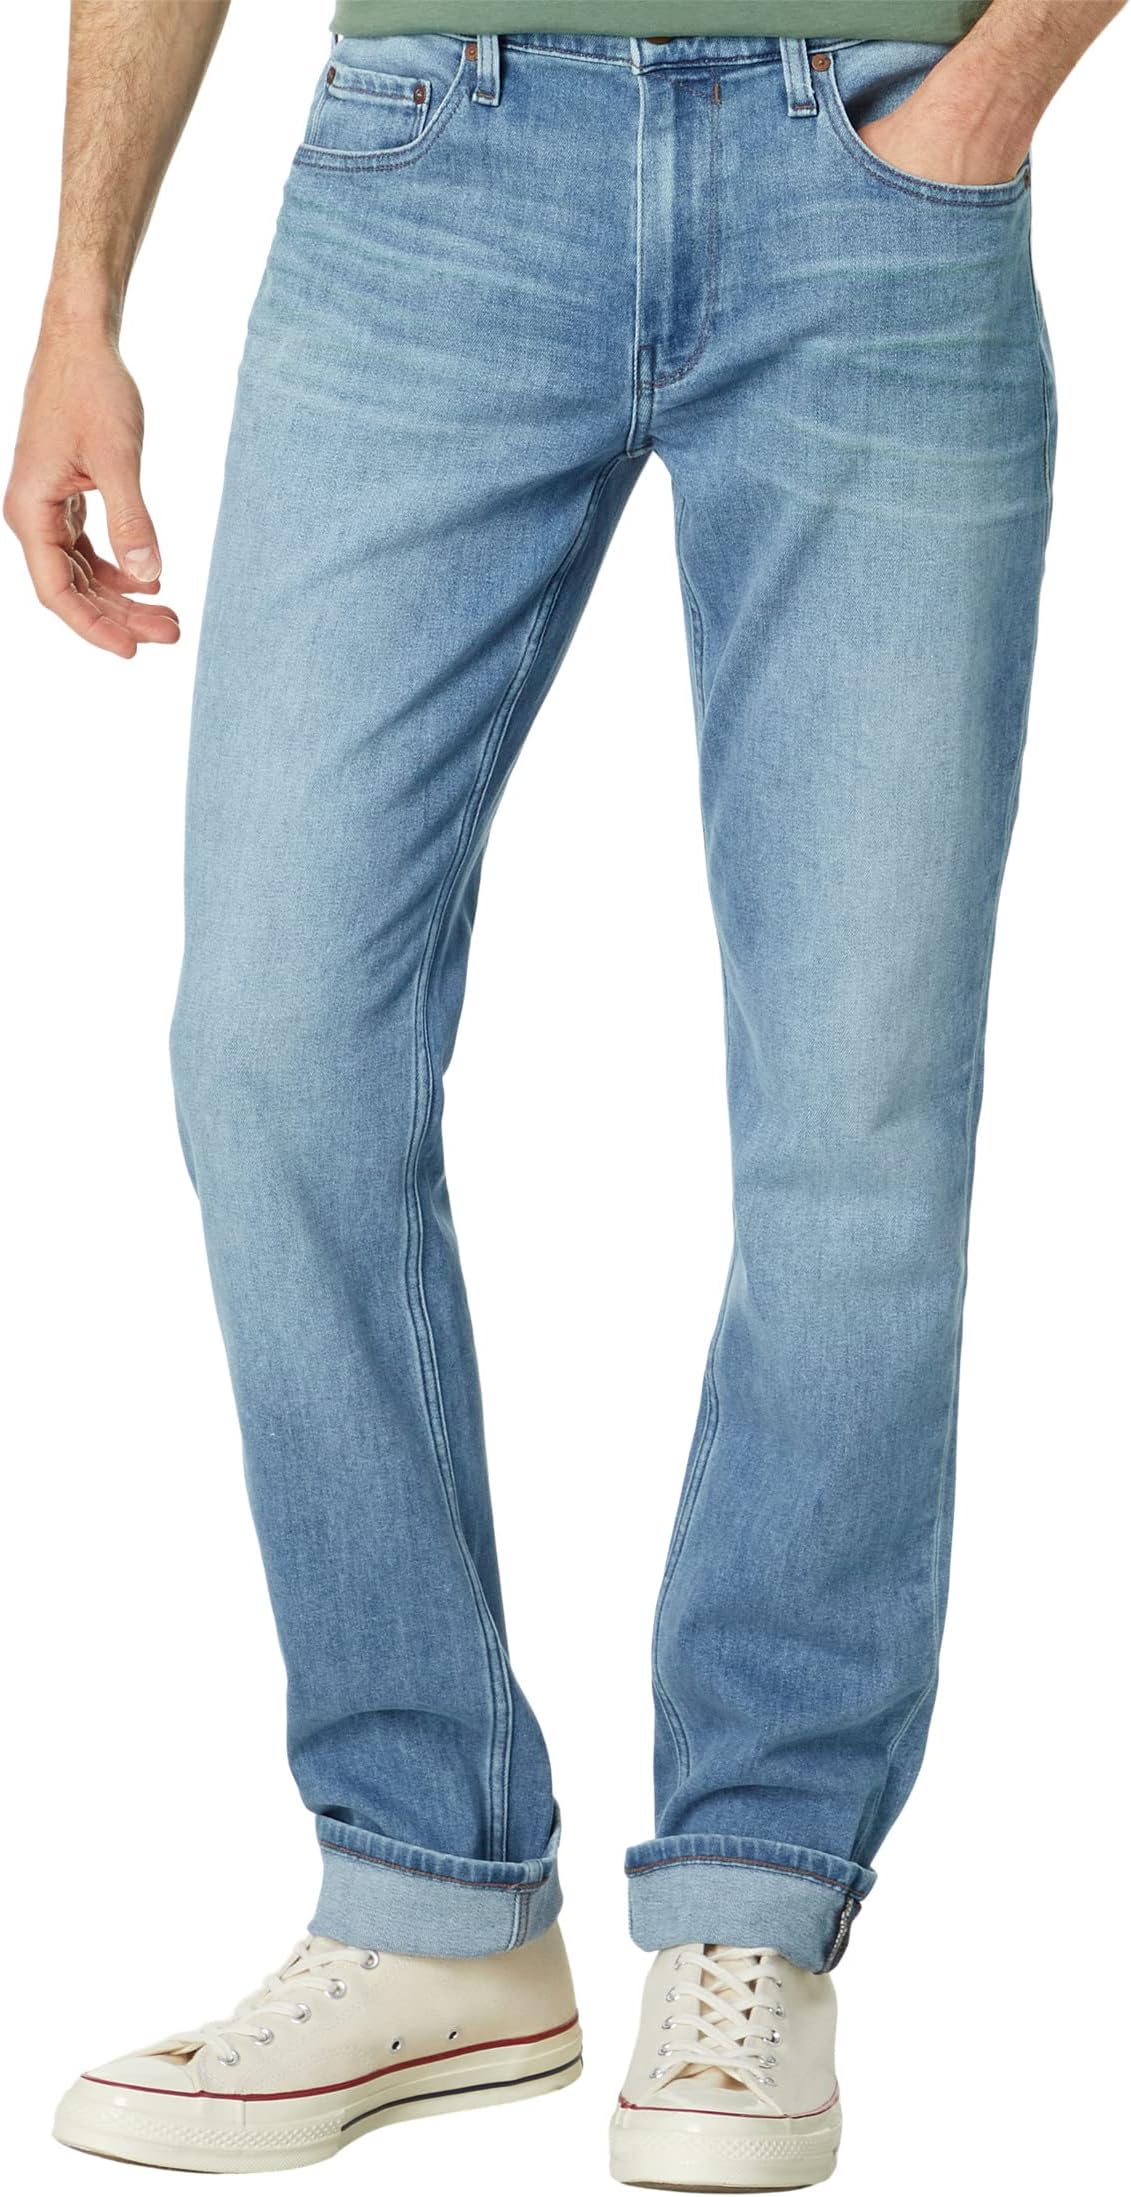 Джинсы Federal Transcend Vintage Slim Straight Fit Jeans Paige, цвет Porters джинсы federal transcend vintage slim straight fit jeans in hartweg paige цвет hartweg